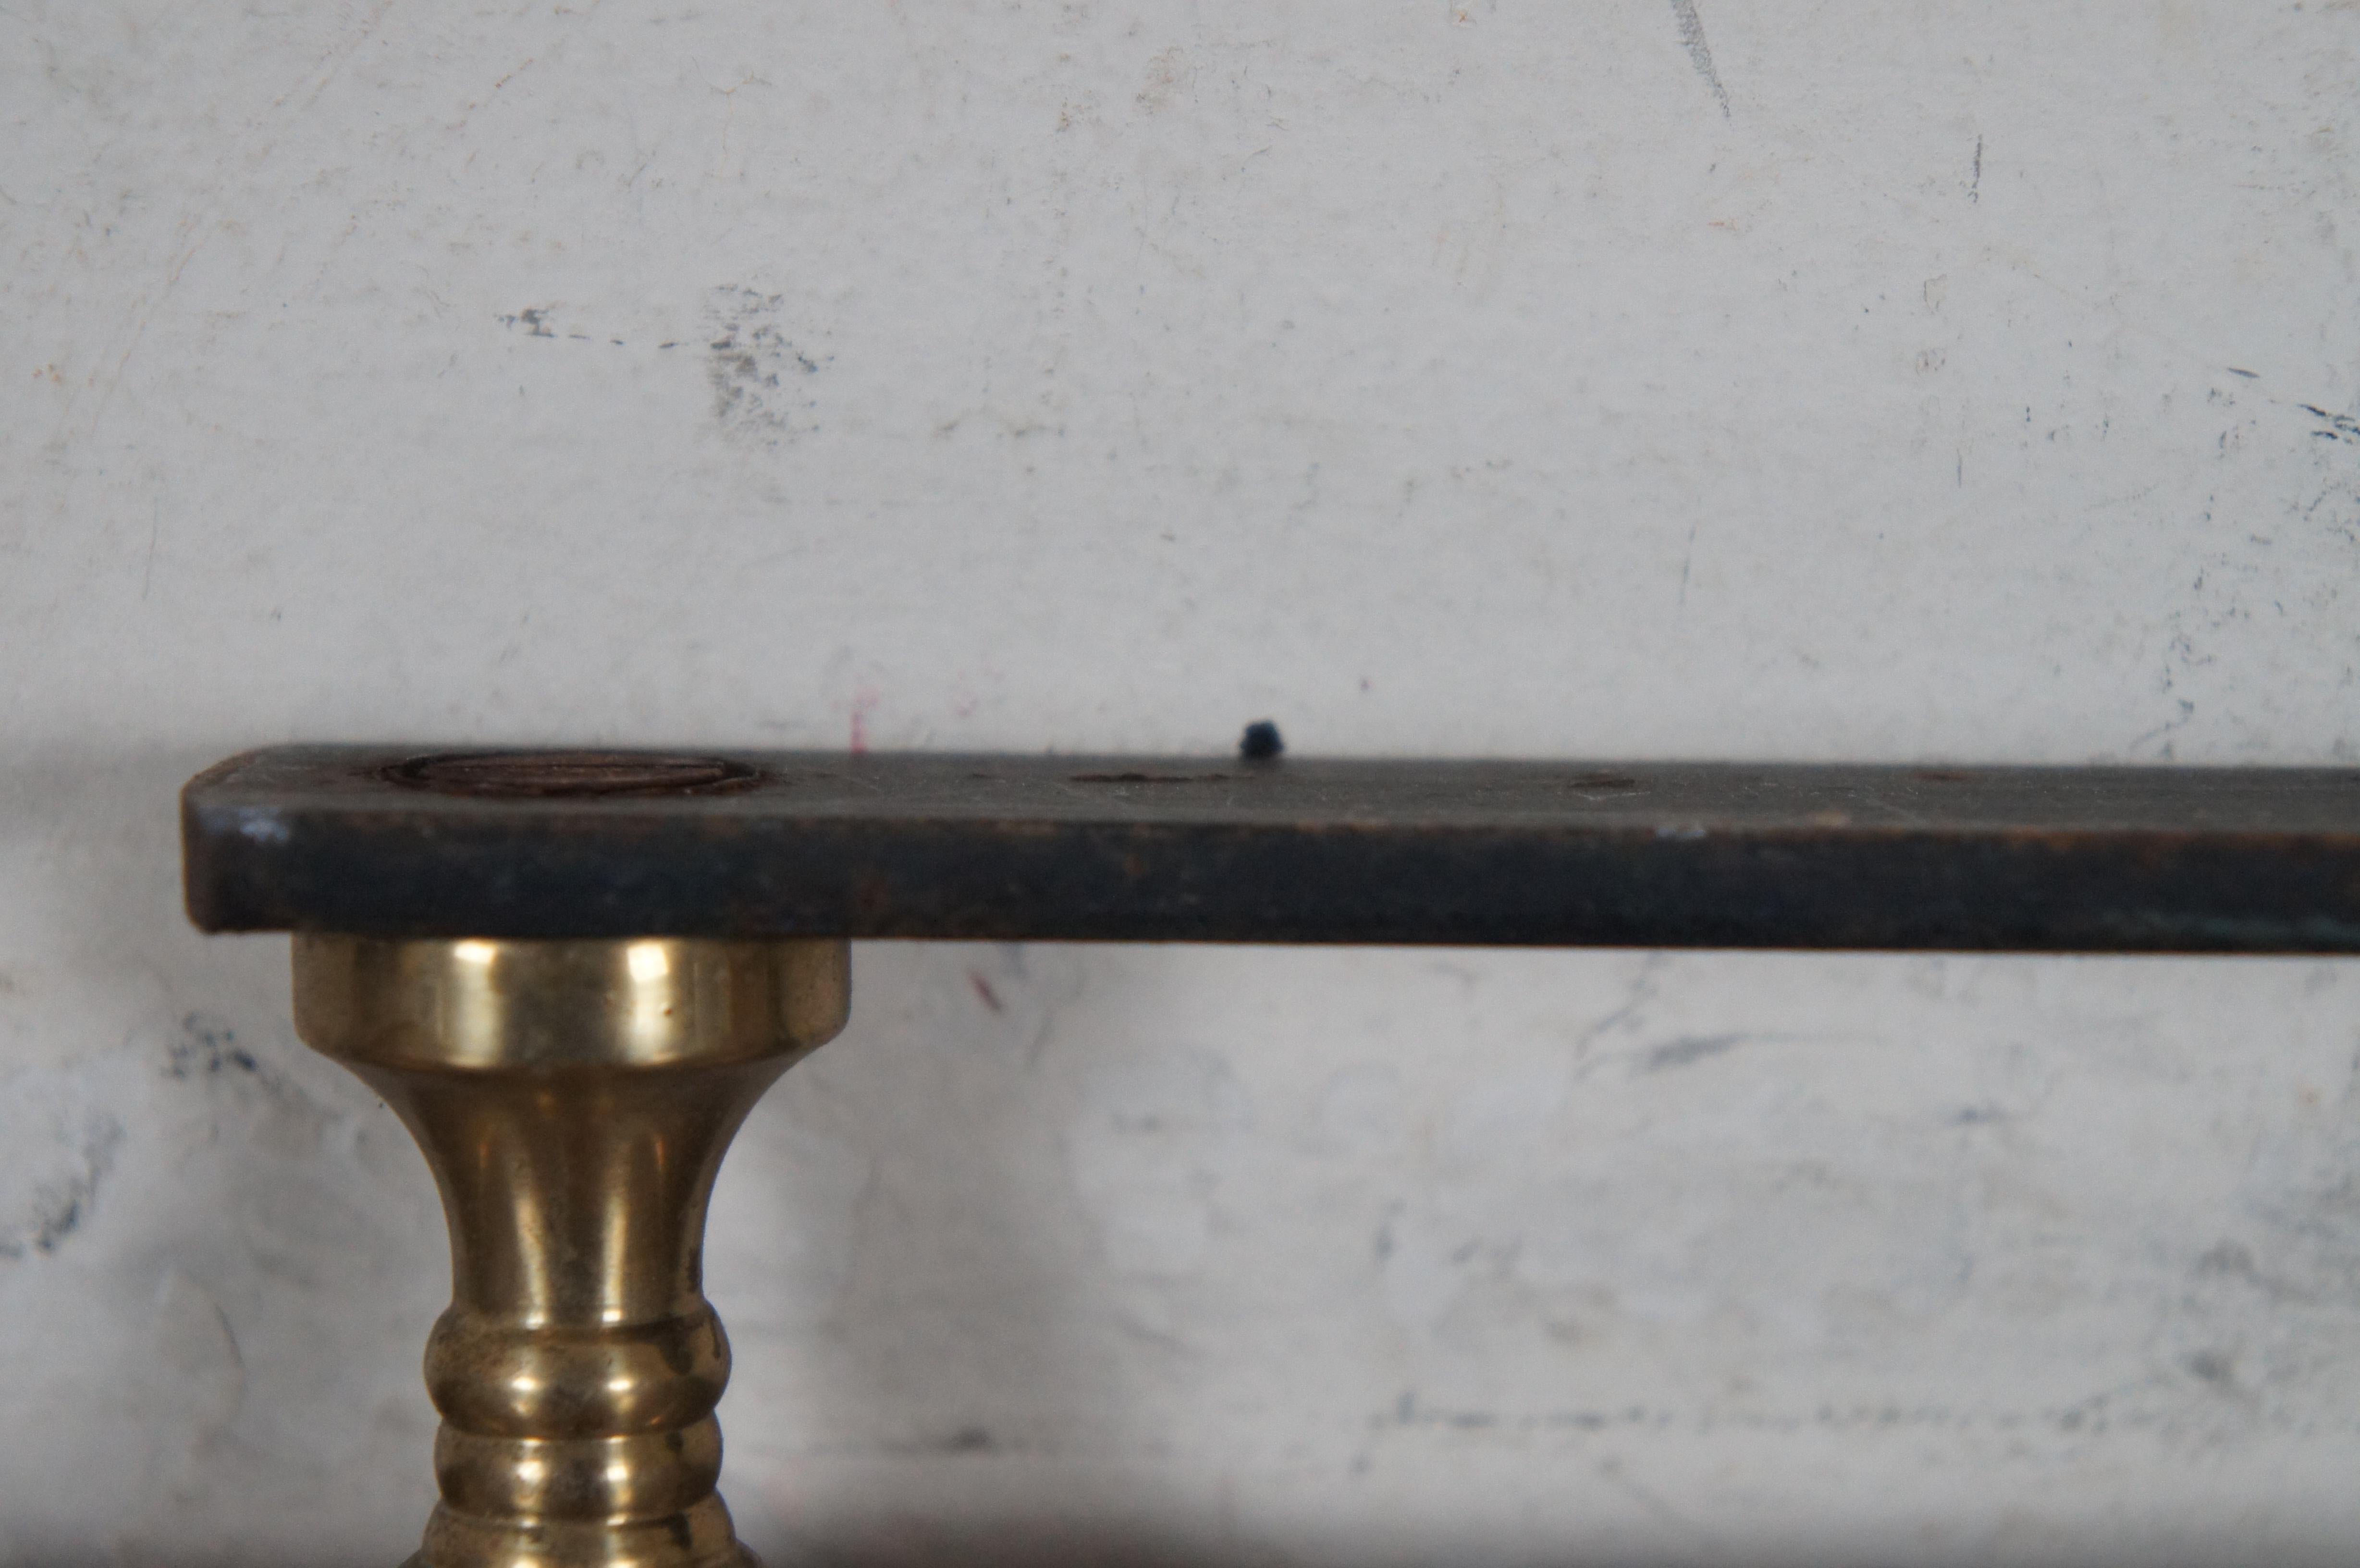 Antique Reclaimed Brass & Iron Wall Hanging Bath Towel Bar Rack Holder 18